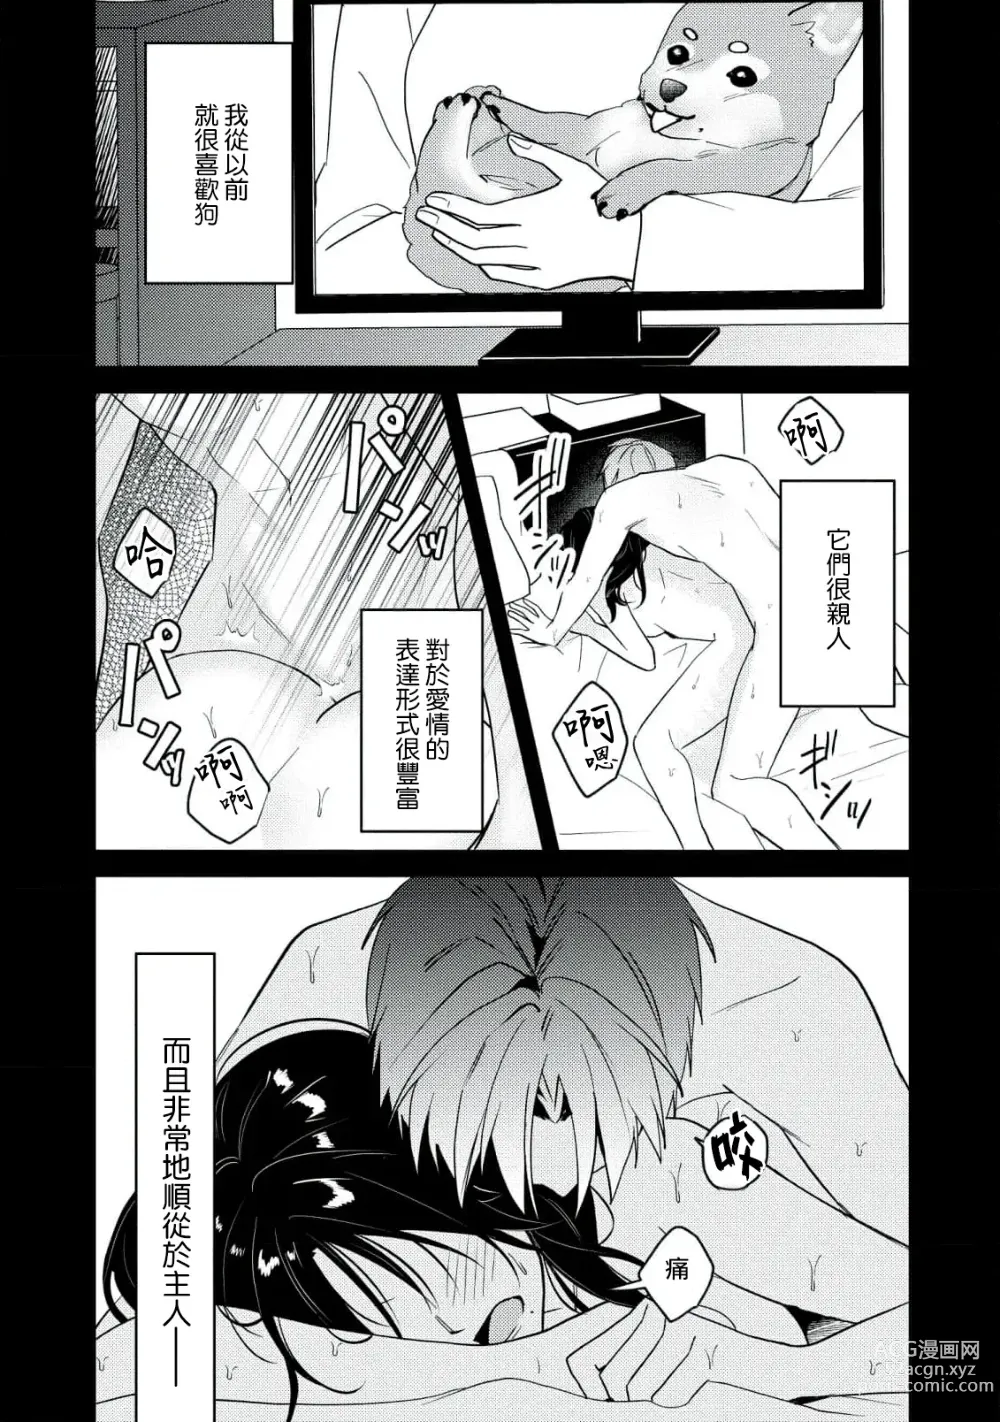 Page 5 of manga Dog or Teacher-放学后，老师们的调教恋爱- Class.1-5 end